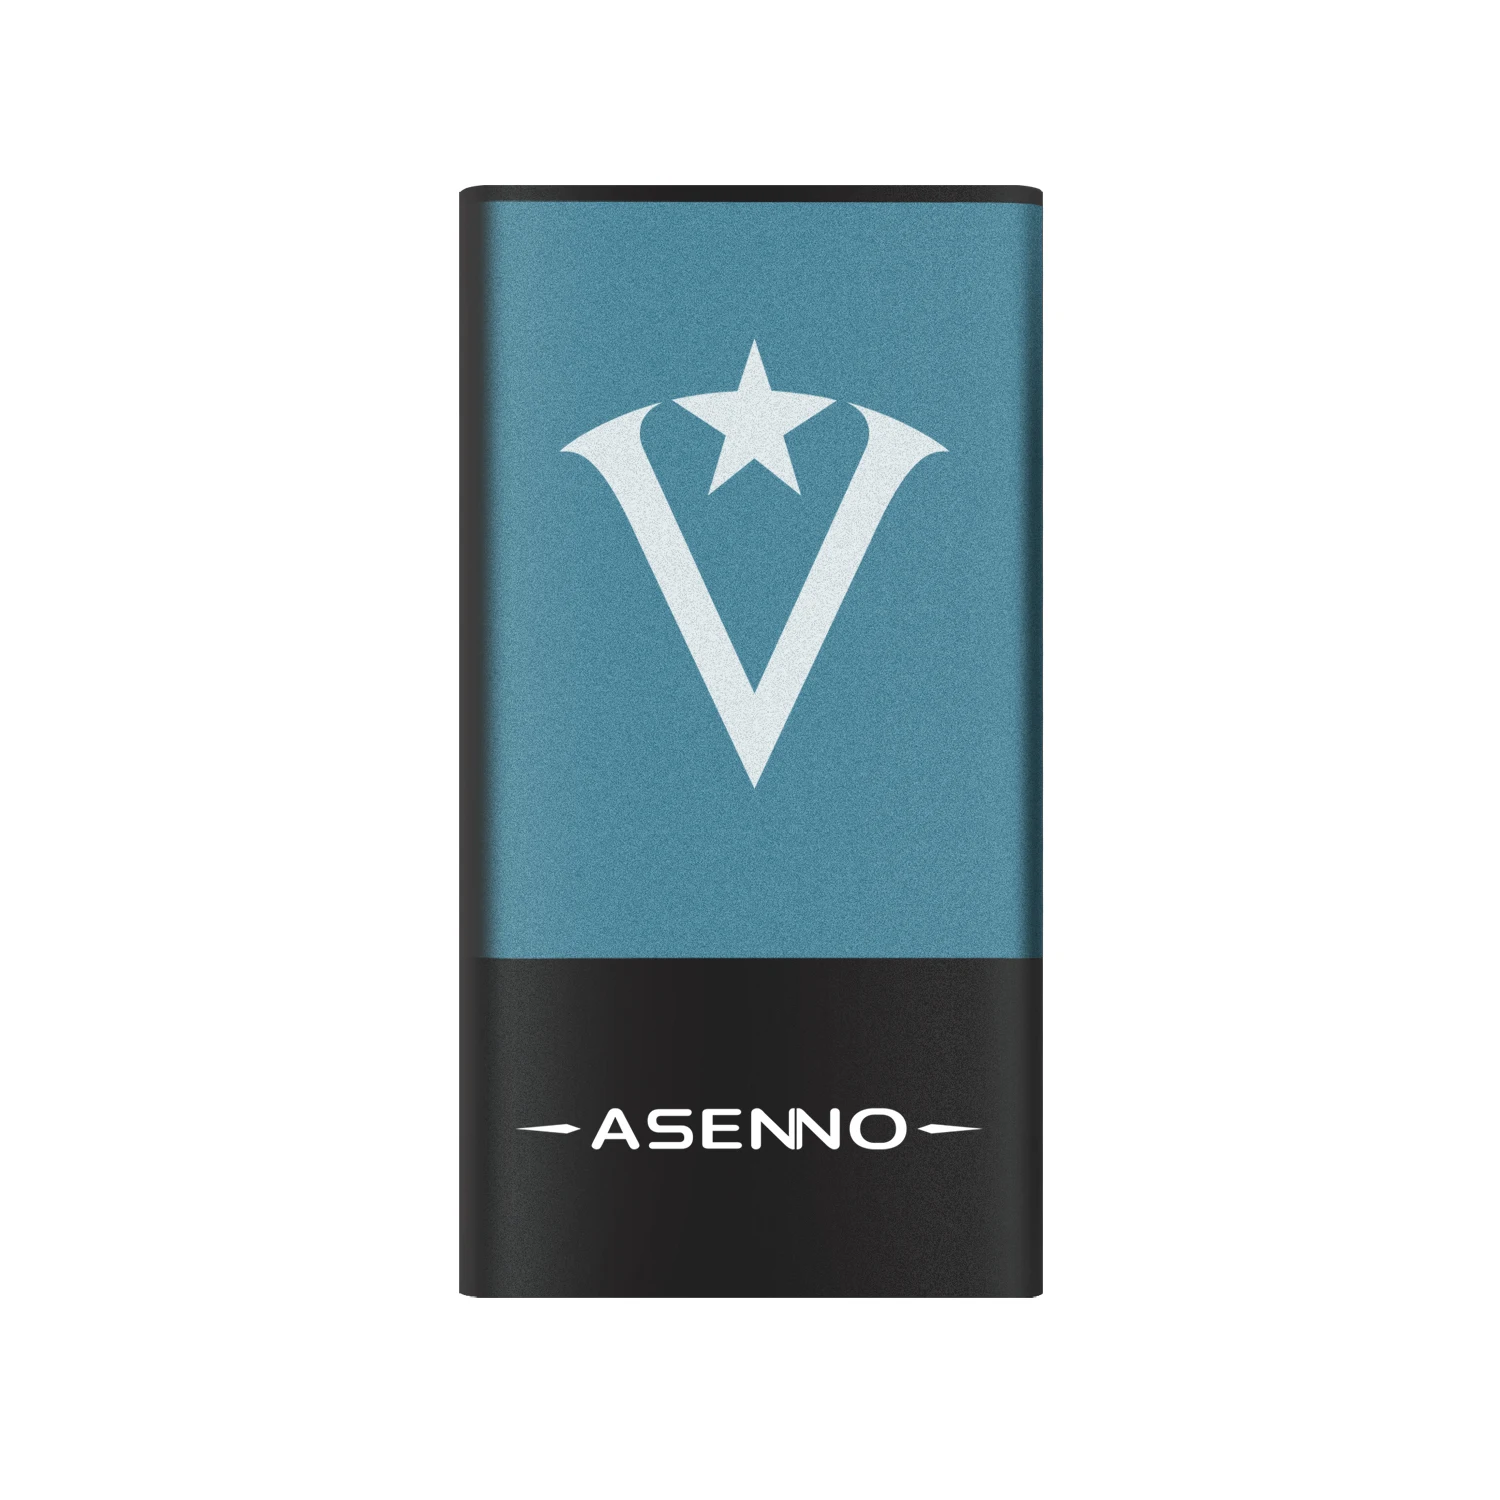 

ASENNO Portable SSD 120GB 250GB 500GB 1TB 2TB MLC external solid state har drive for computer laptop desktop, Blue